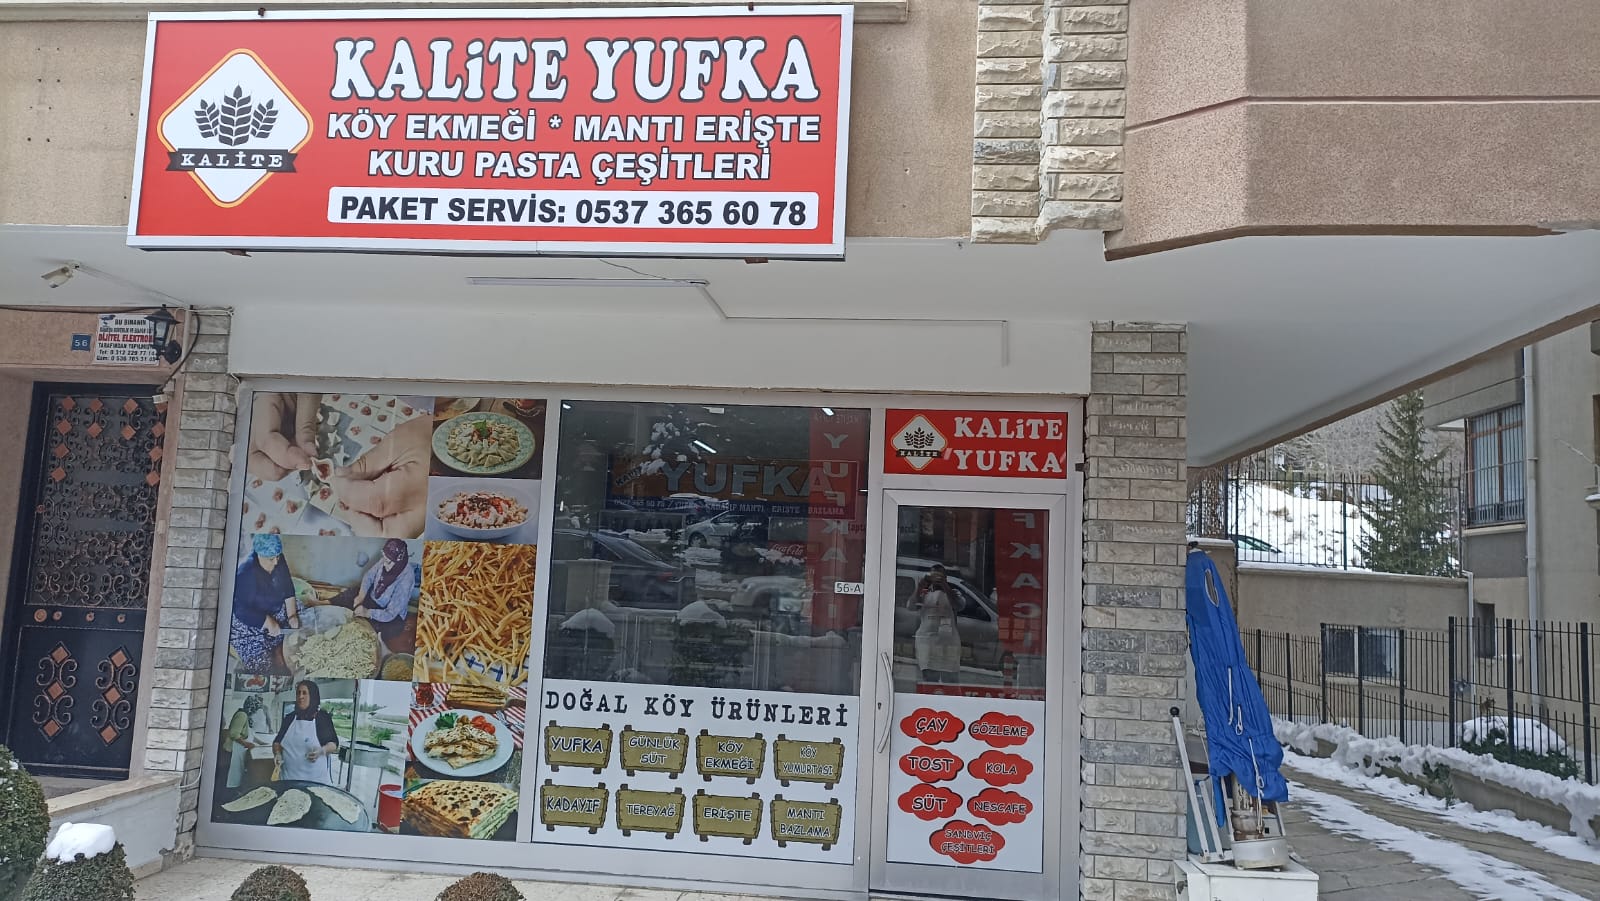 Kalite Yufka